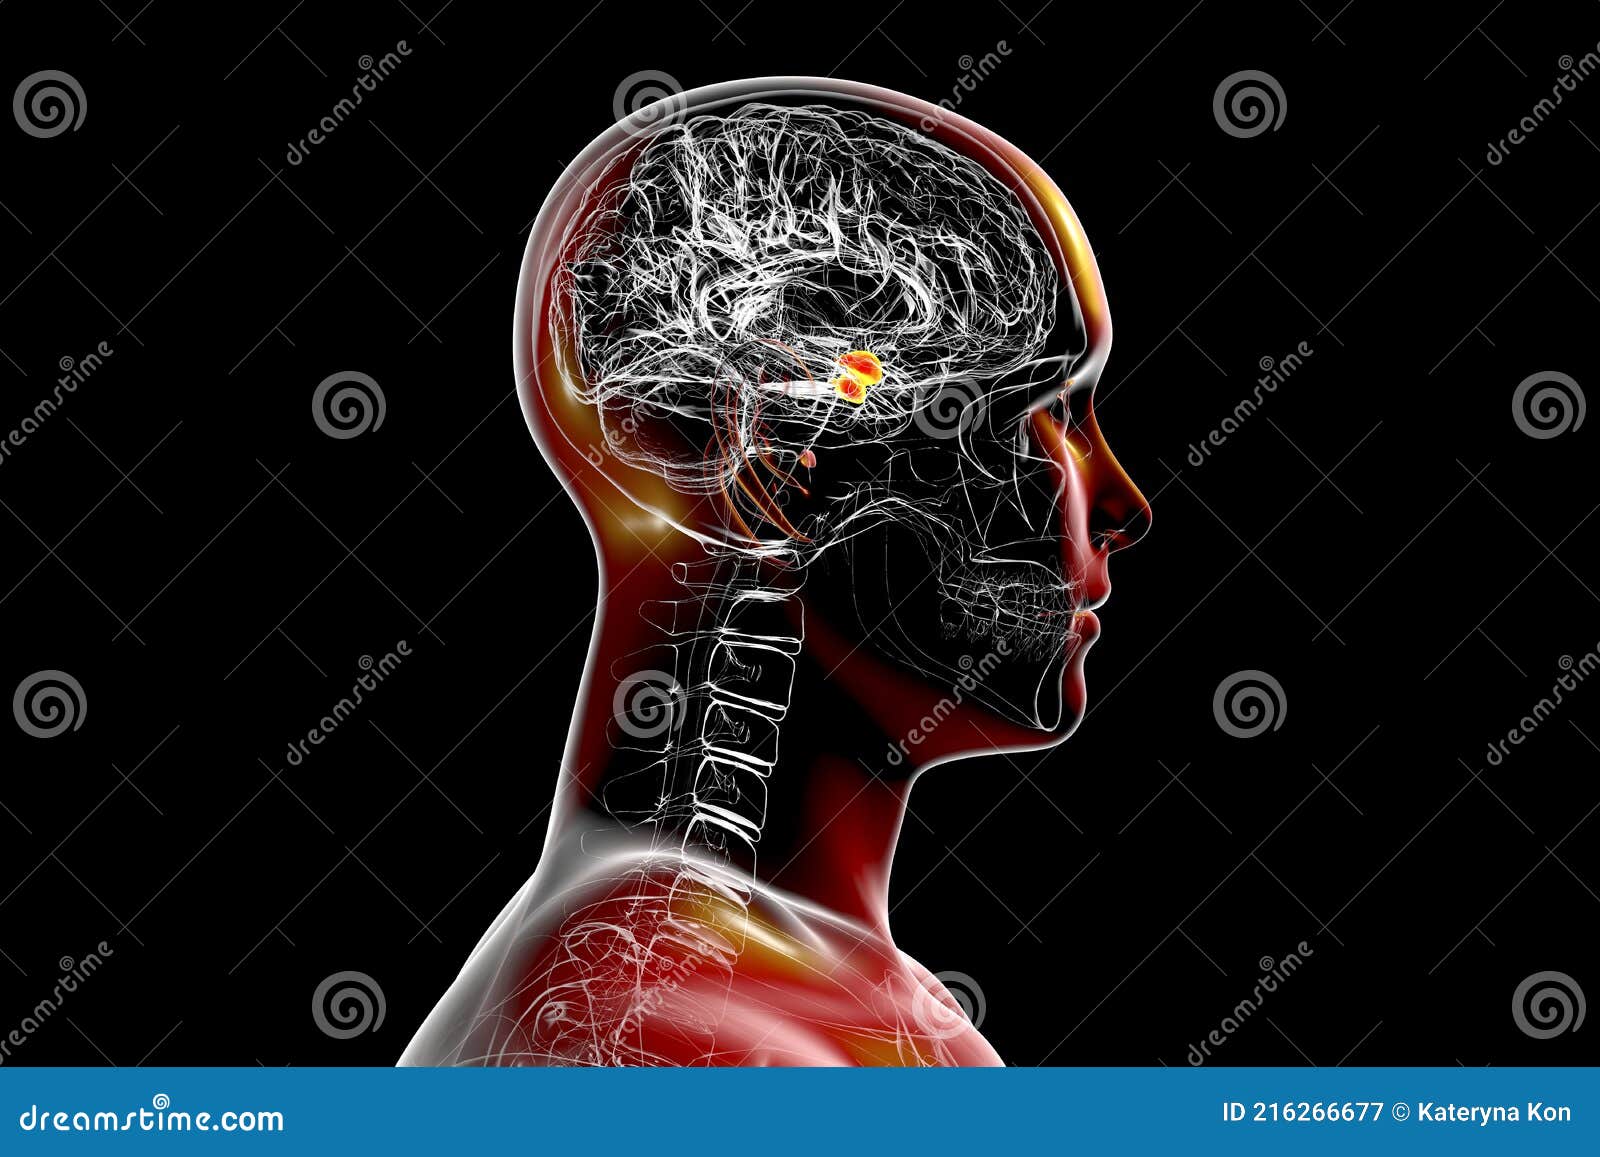 amygdala, also known as corpus amygdaloideum, in the brain